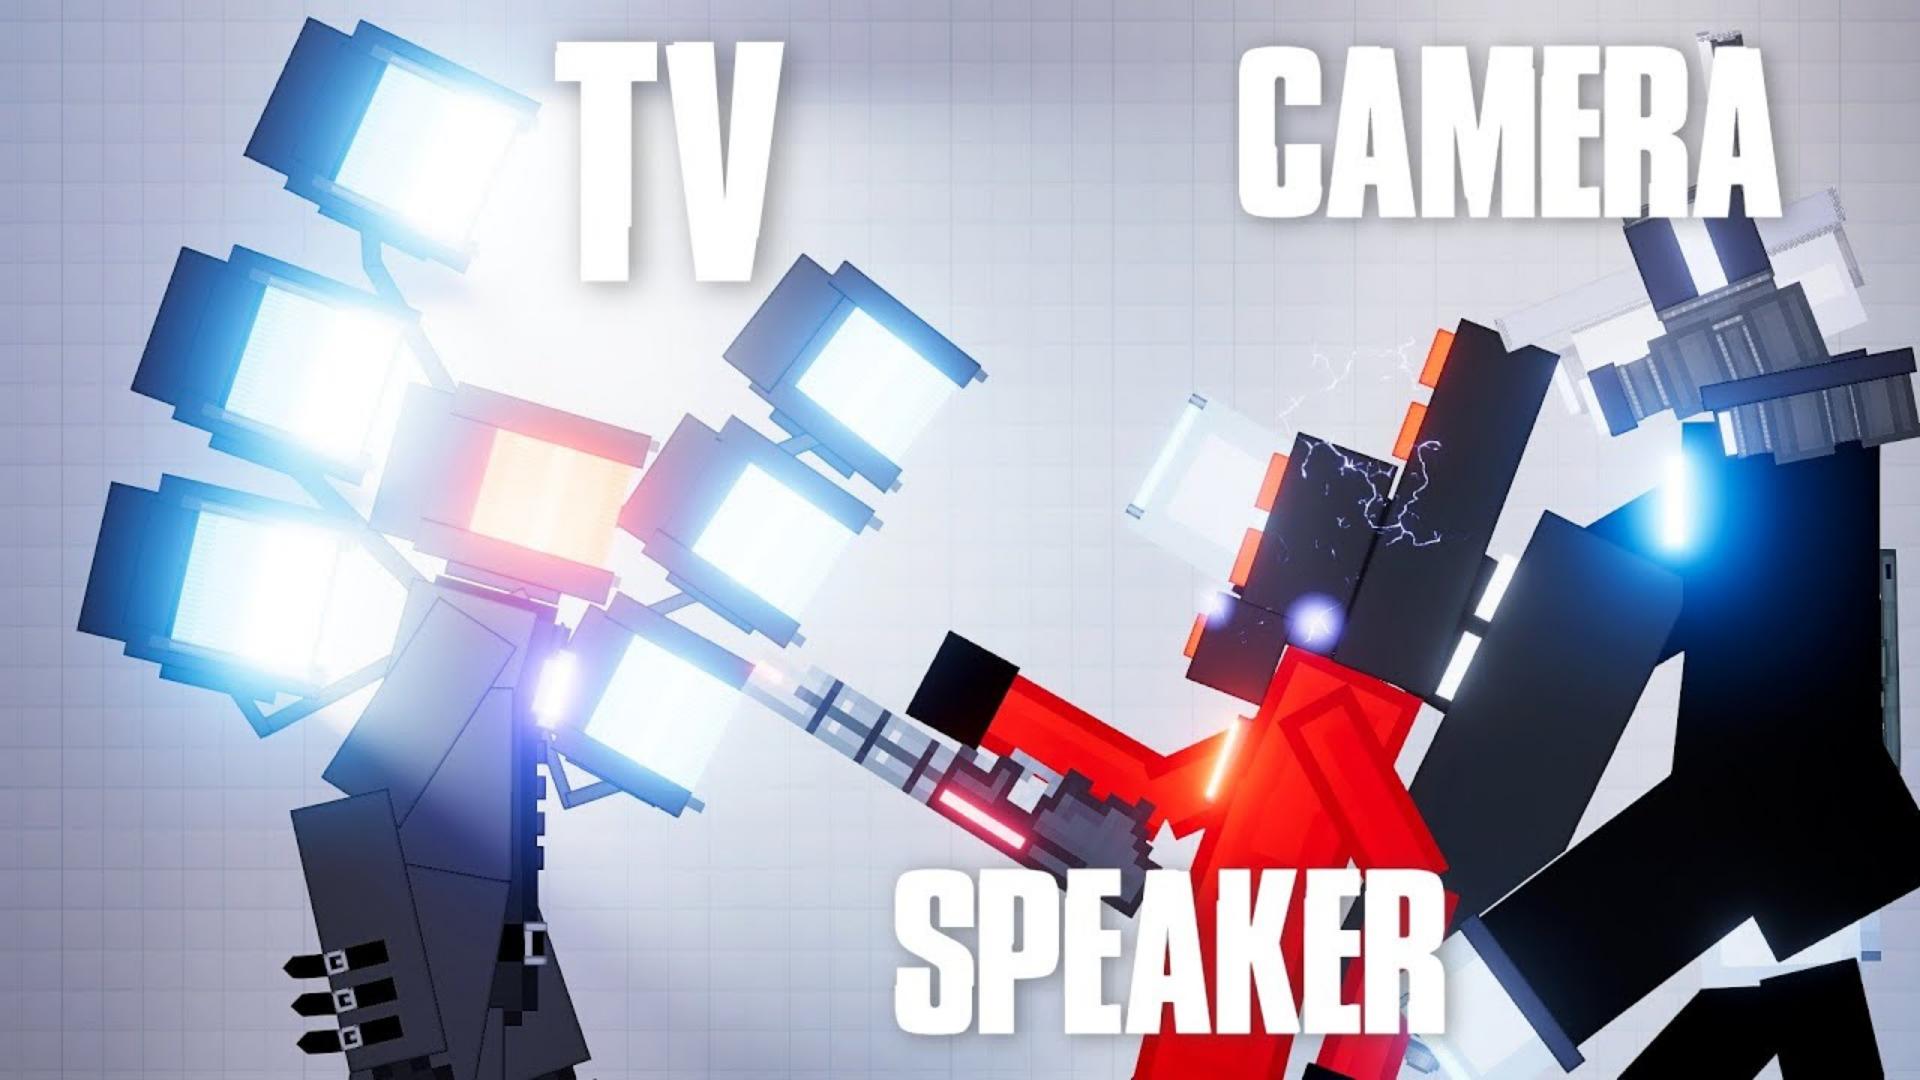 Titan speaker titan tv man. Камера Мэн Титан апгрейд. Spekerман Титан. Апгрейд Титан спикер мен. Titan Camera man x Titan TV man Speaker.